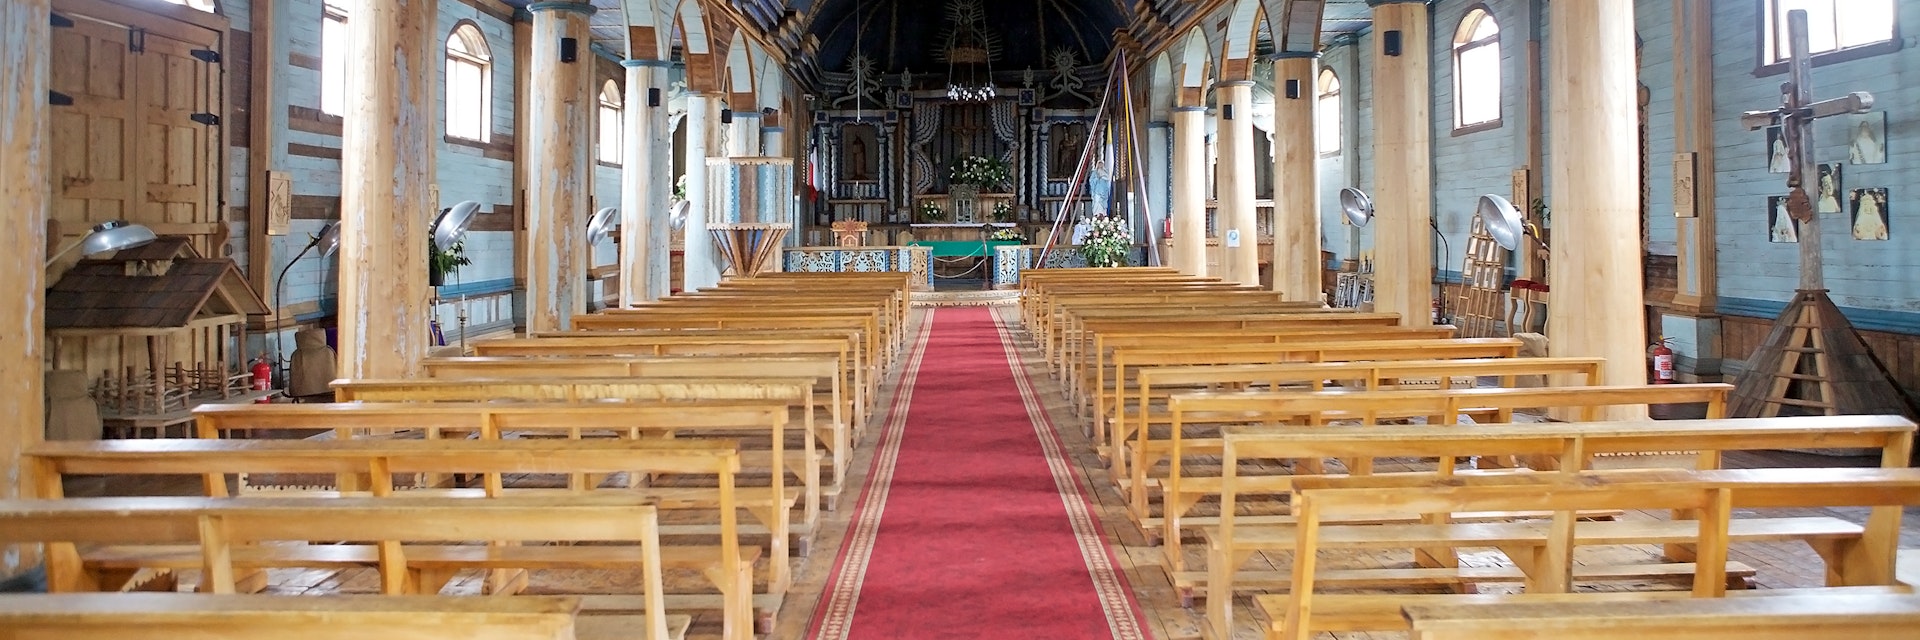 Inside the Church of Santa Maria de Loreto at Achao.